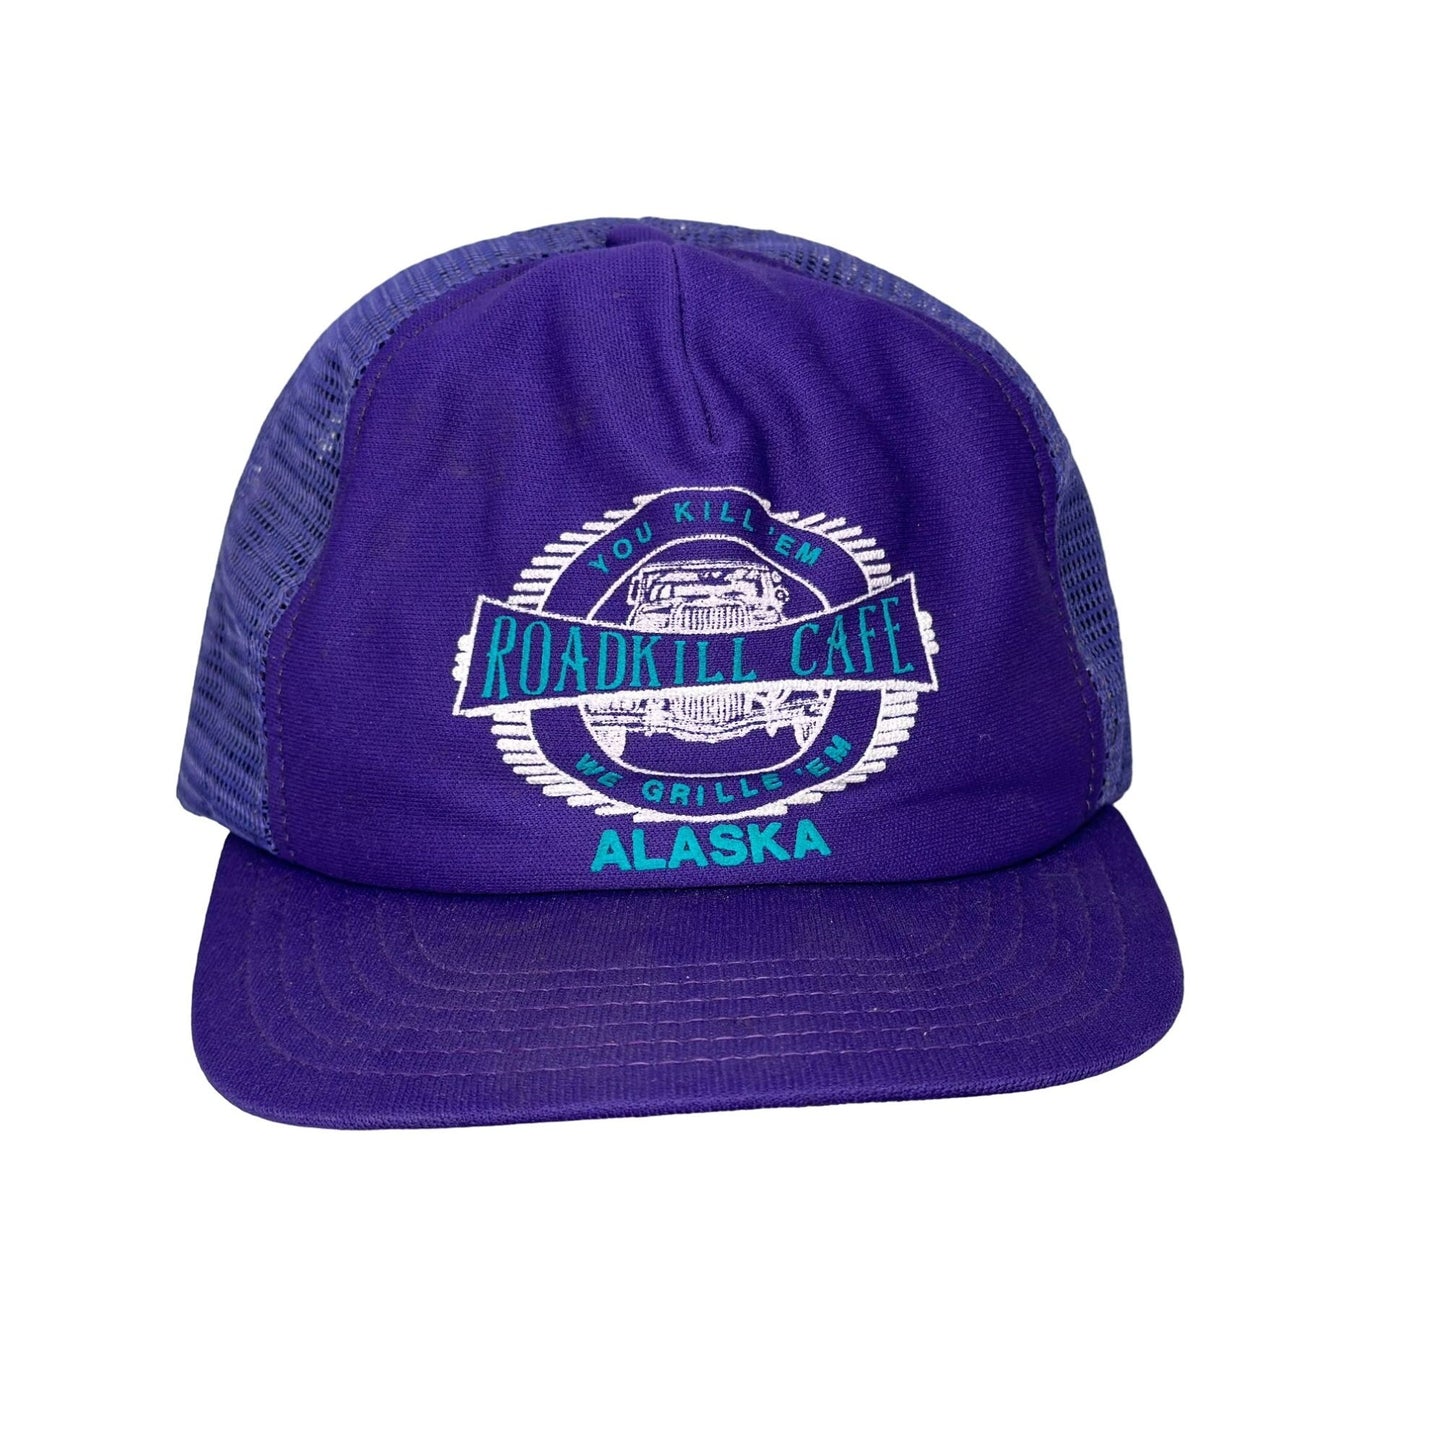 Vintage Purple Mesh Foam Trucker Hat Cap You Kill'em We Grill'em Roadkill Cafe Alaska